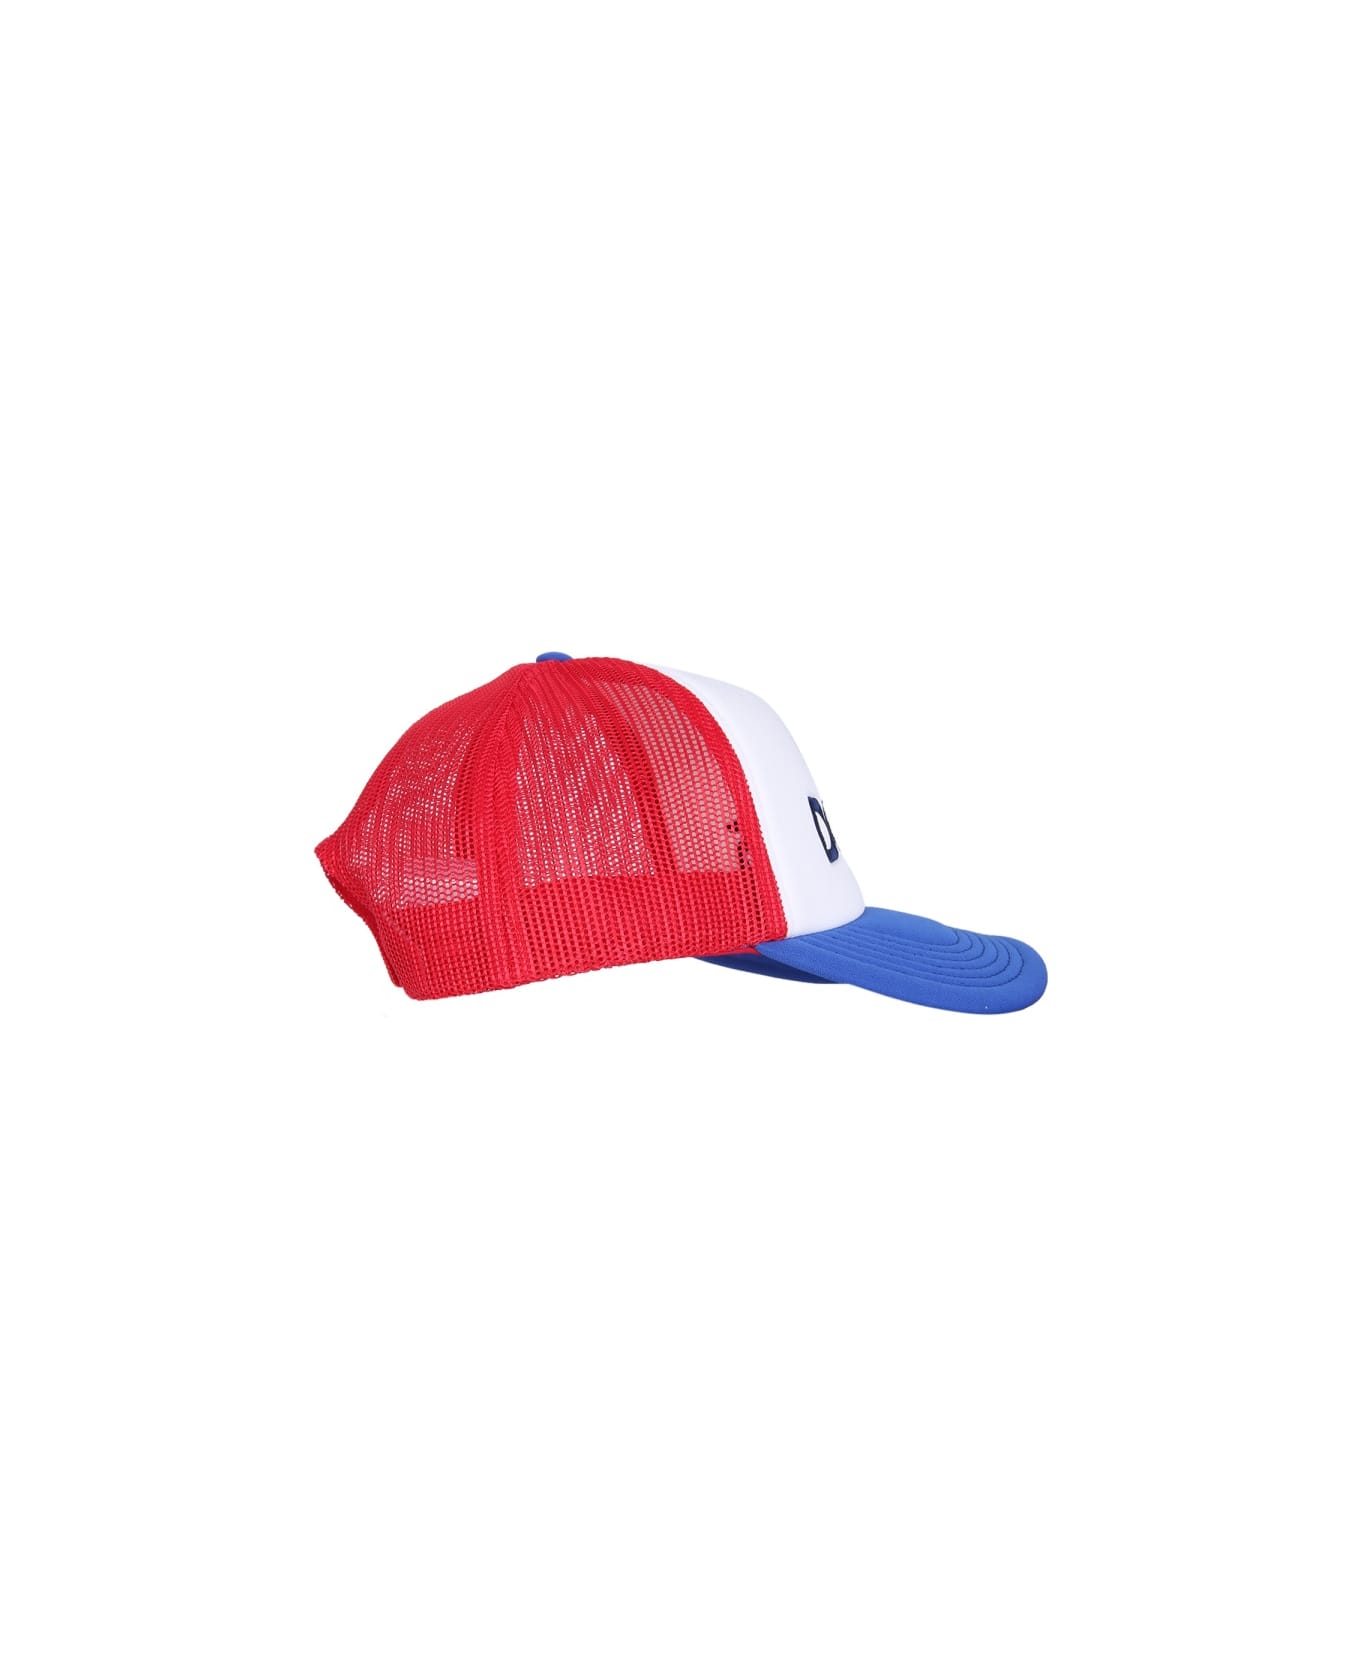 Department Five Baseball Cap - MULTICOLOUR 帽子